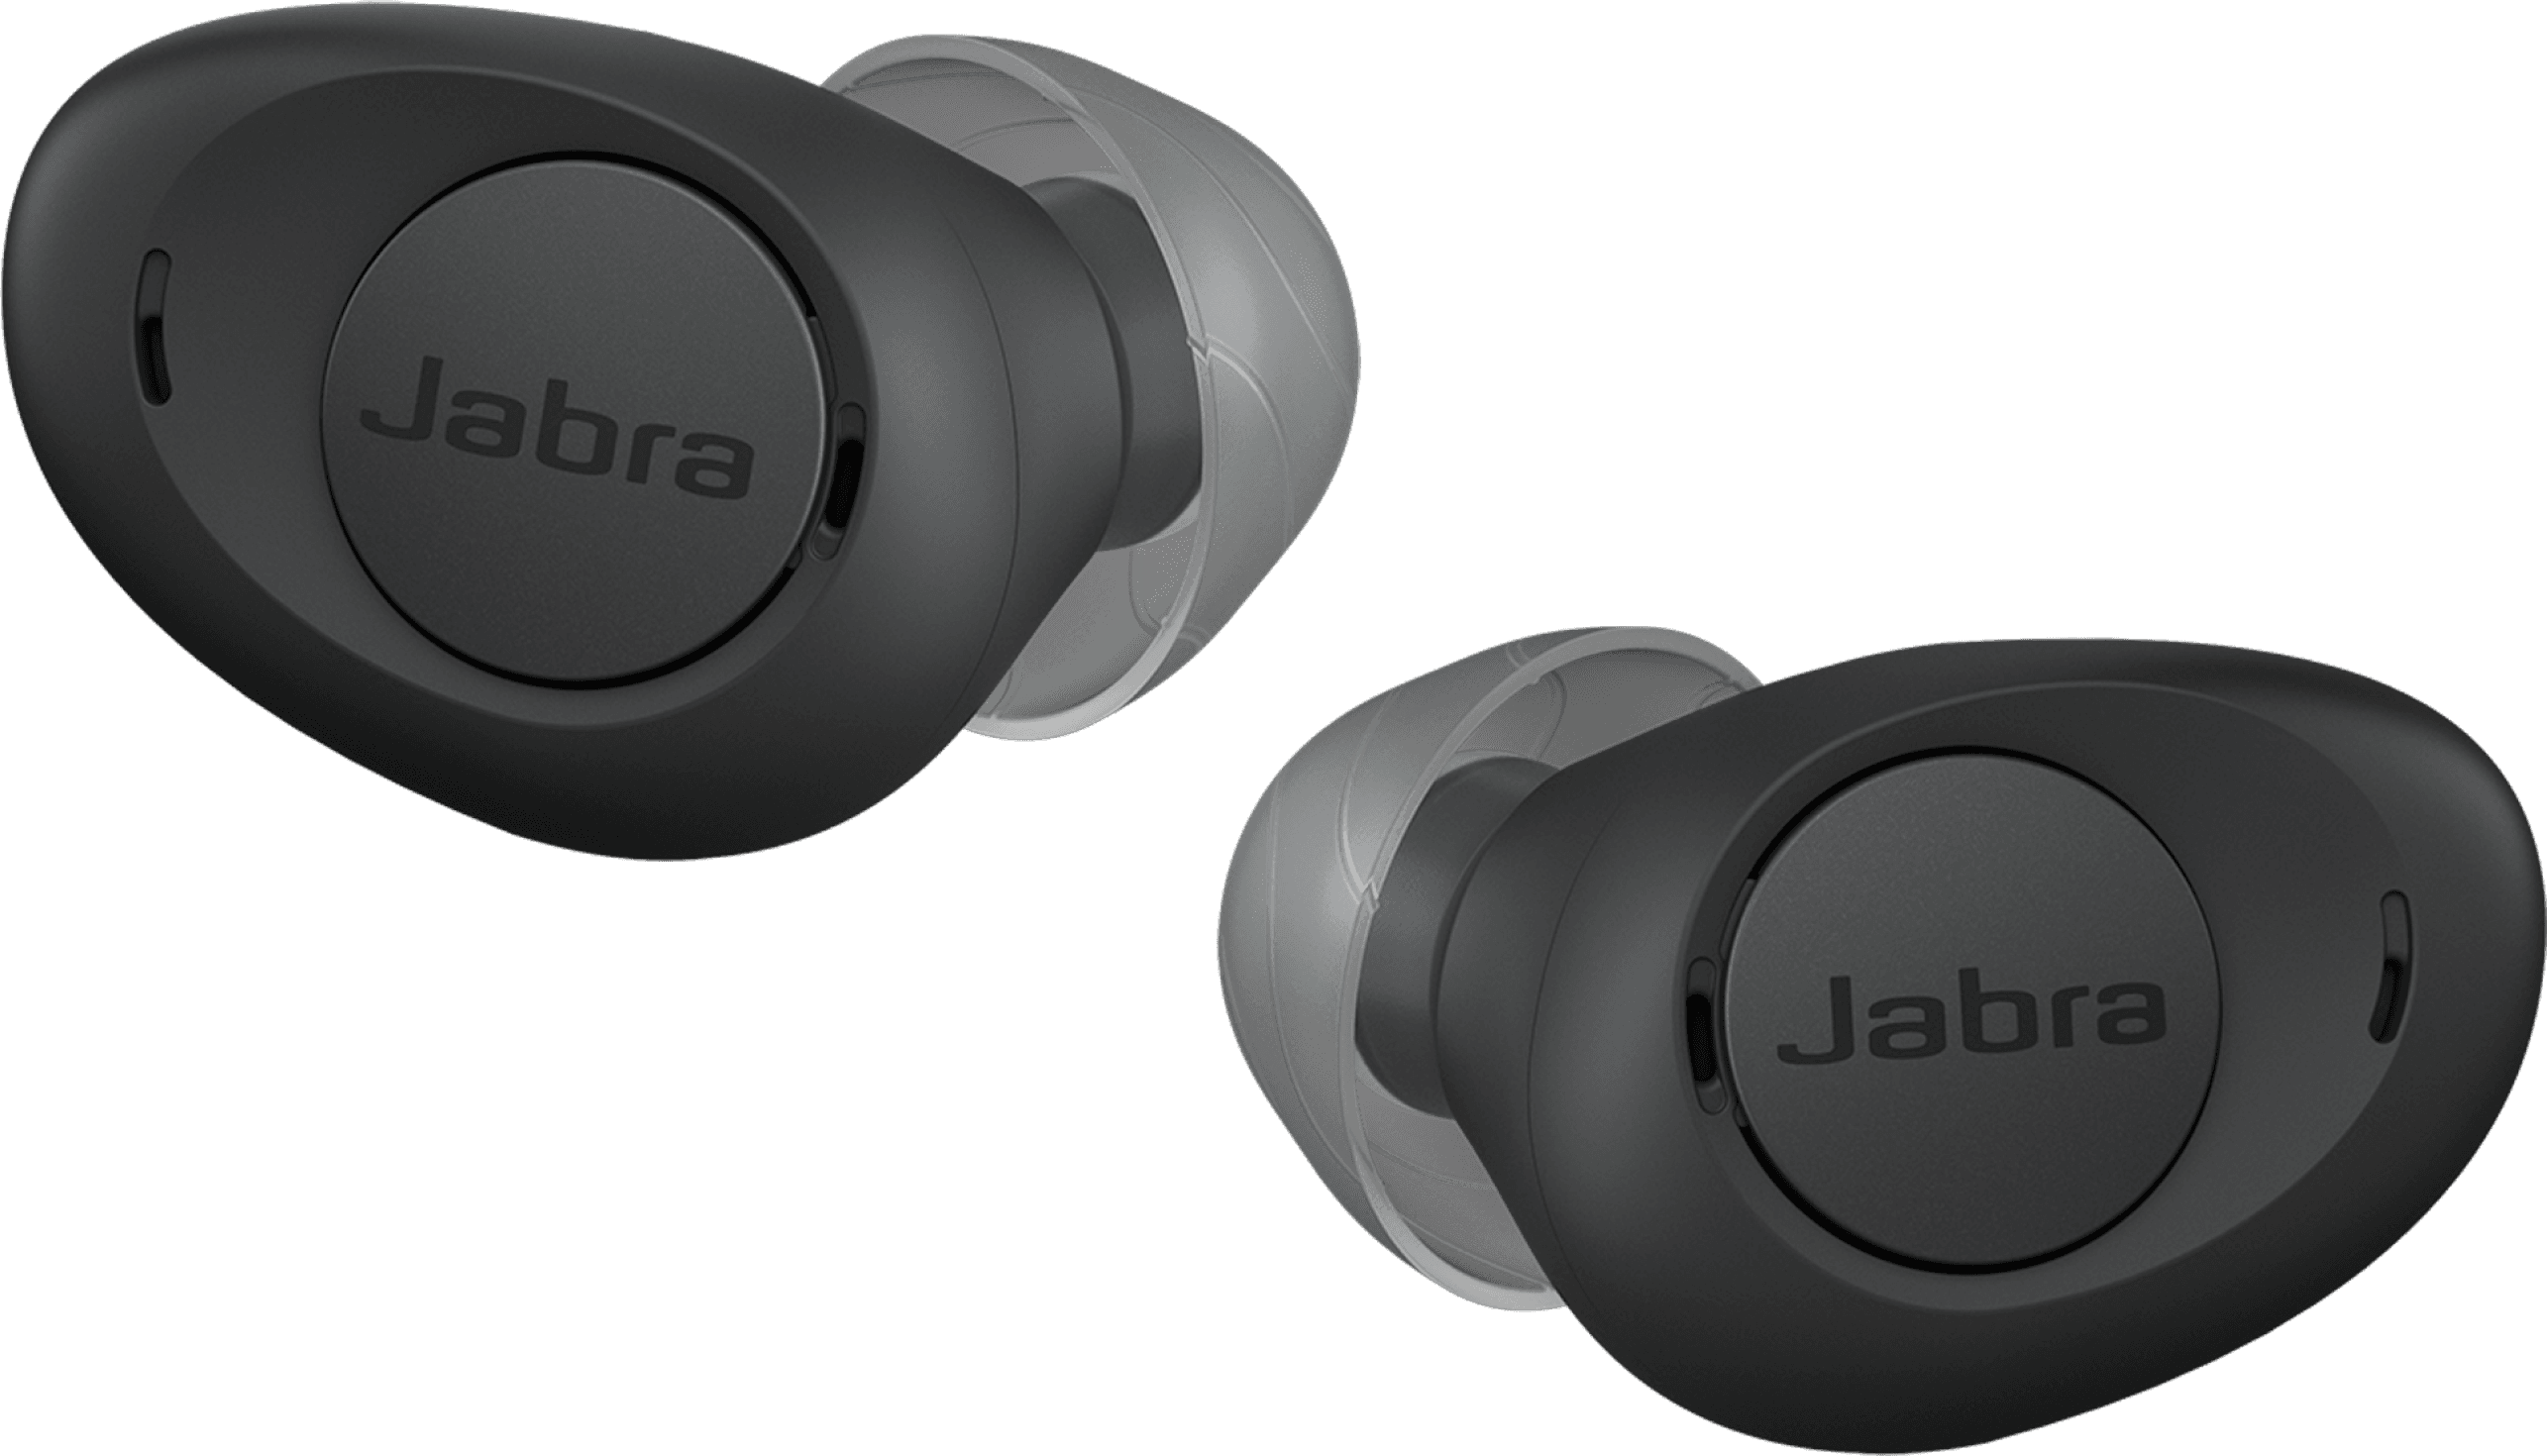 Jabra earbuds